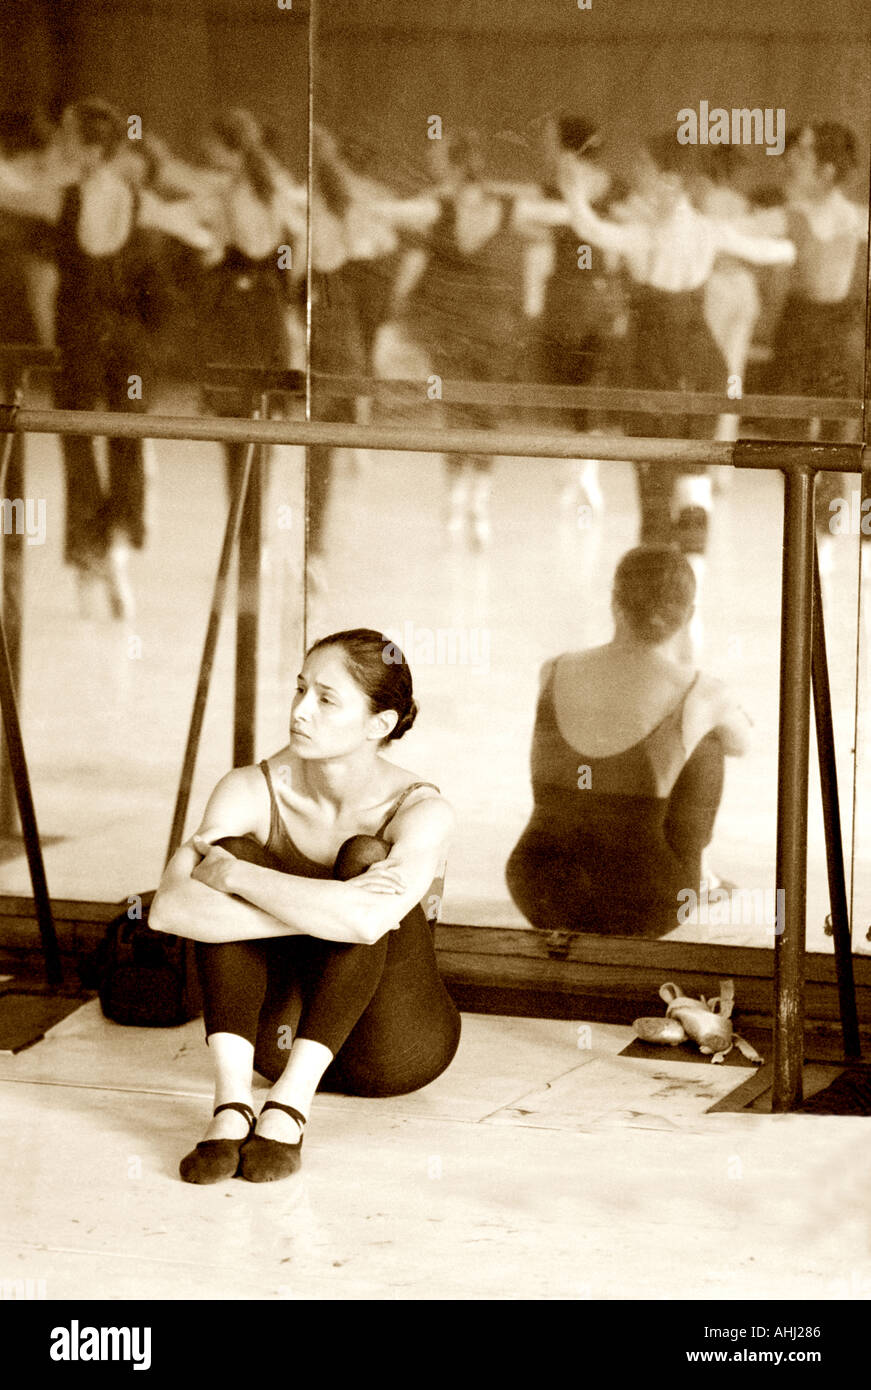 Ballerina rehearsal ballet dancer stage performance Stock Photo